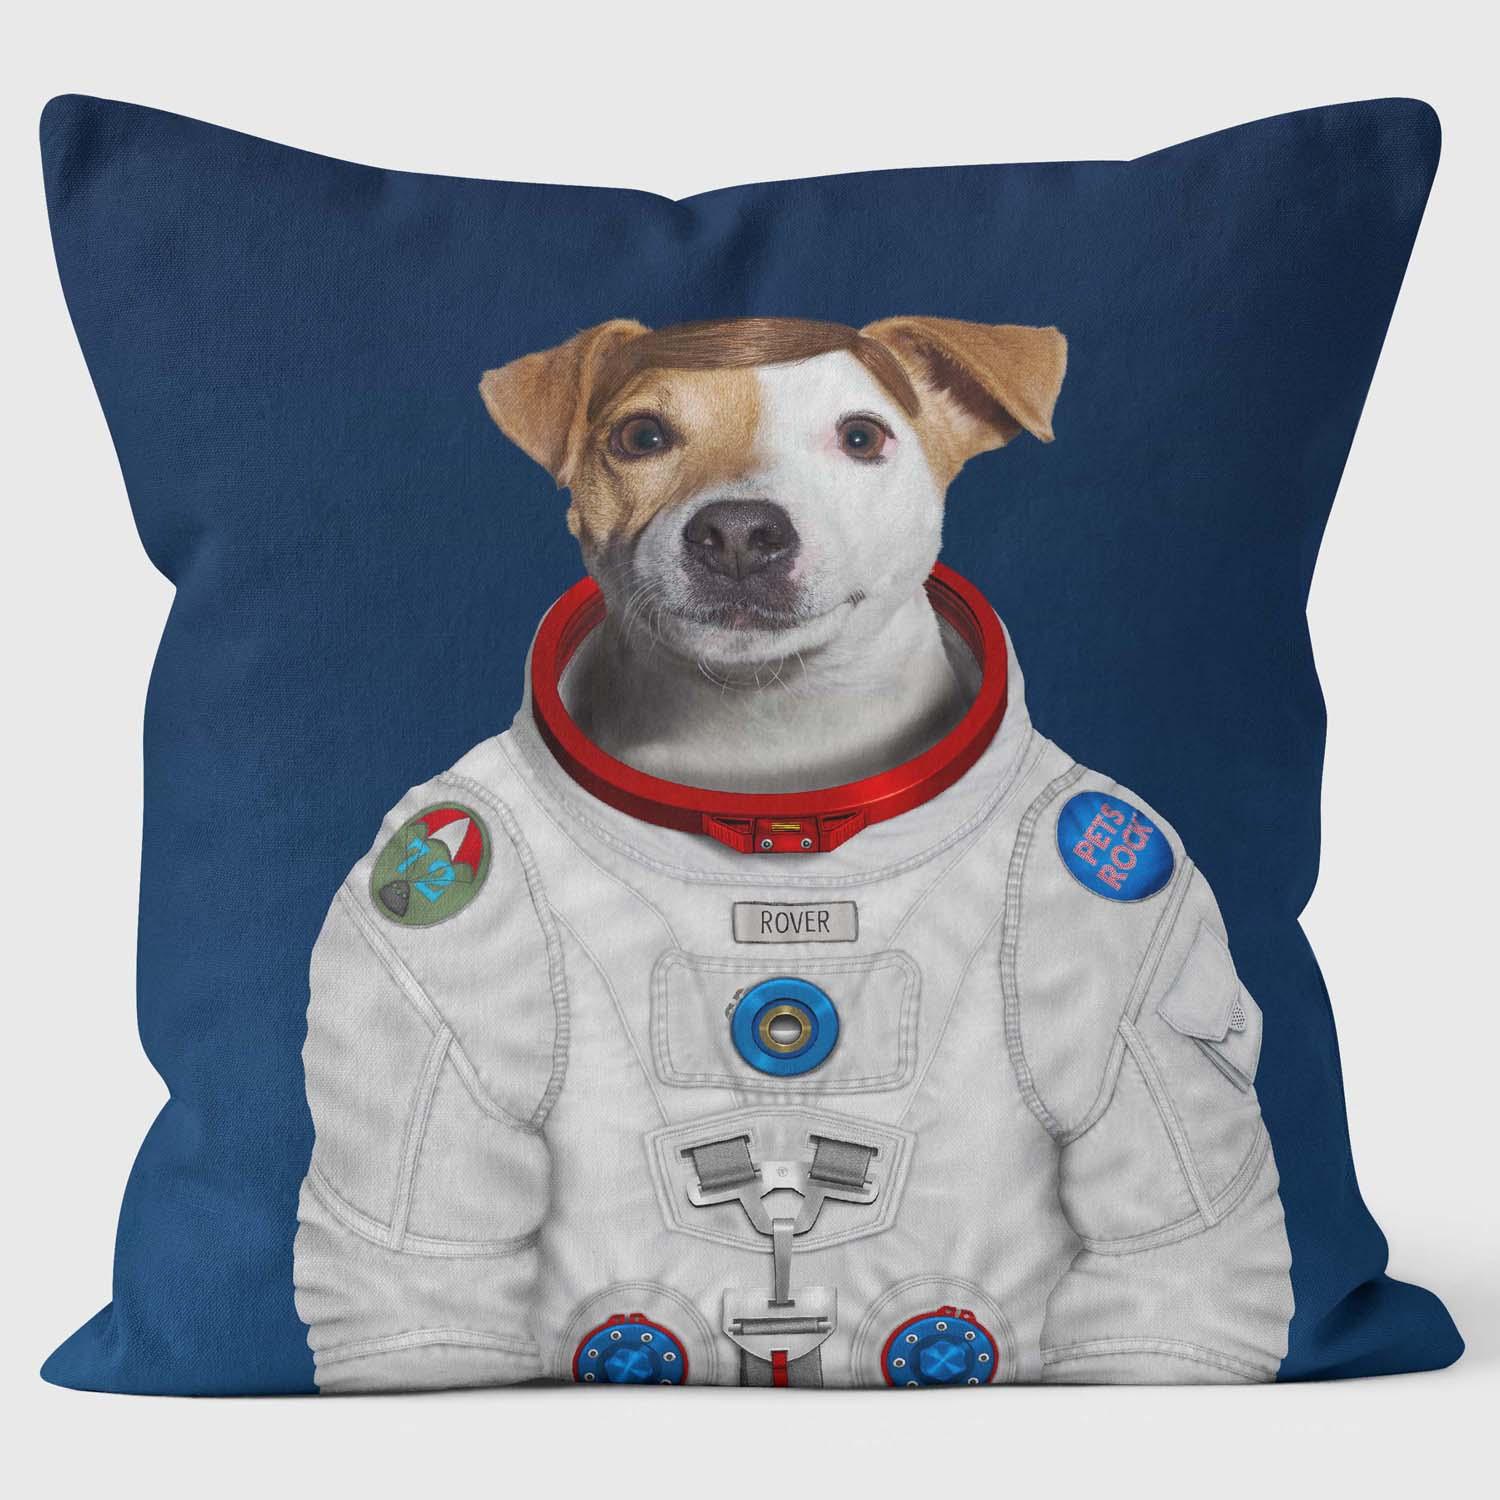 Rover - Pets Rock Cushion - Handmade Cushions UK - WeLoveCushions